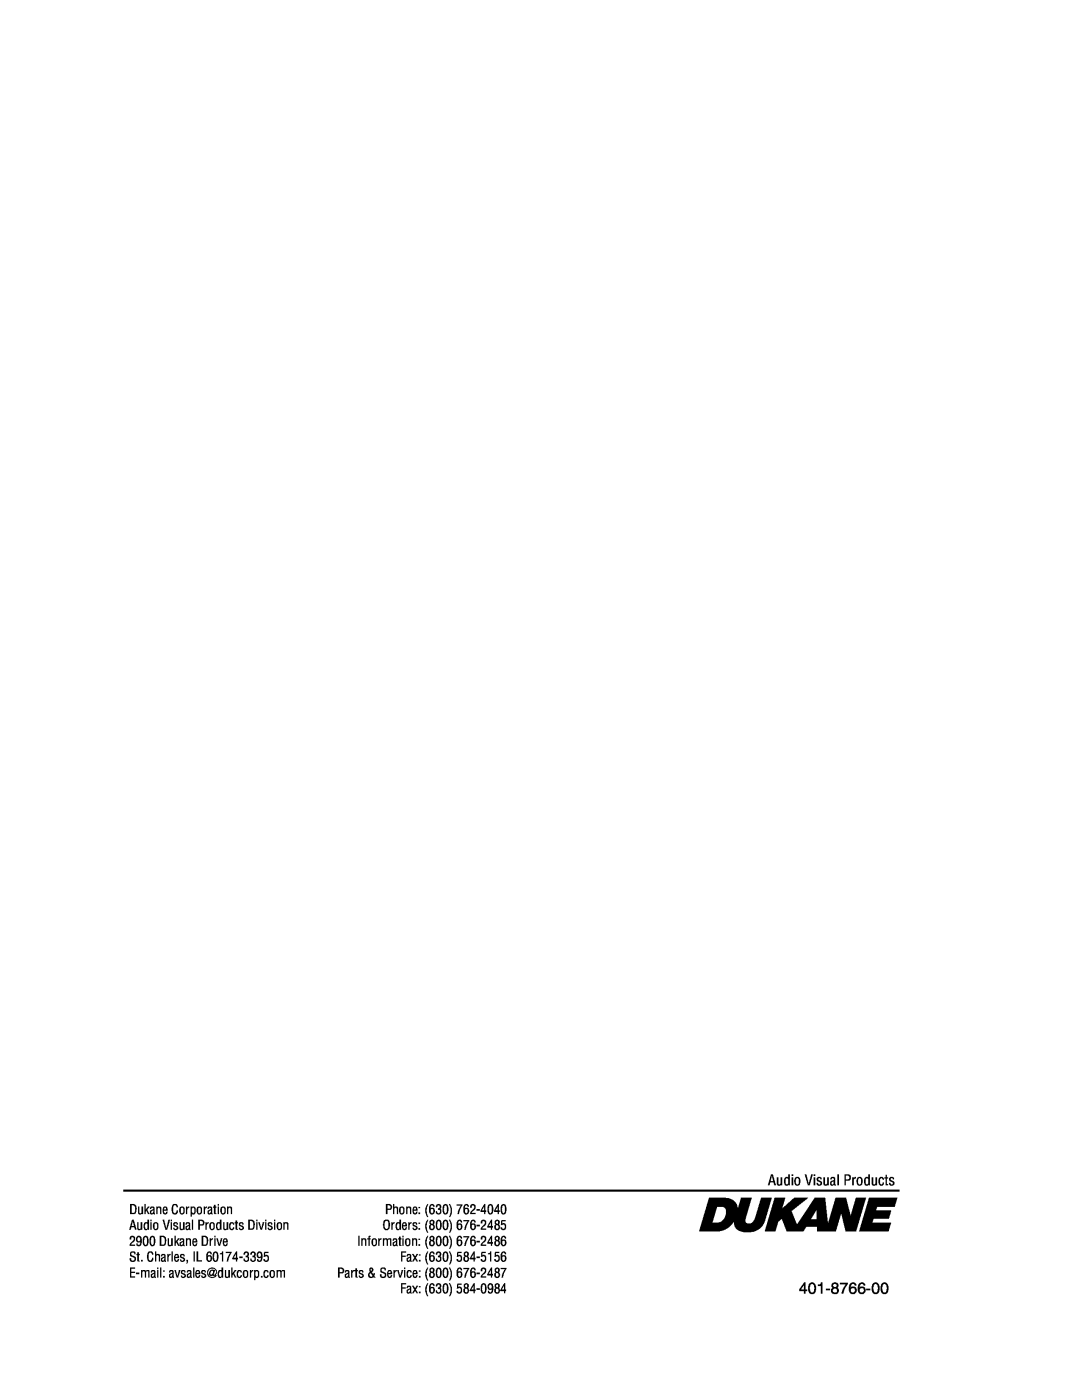 Dukane manual 401-8766-00, Audio Visual Products, Parts & Service 